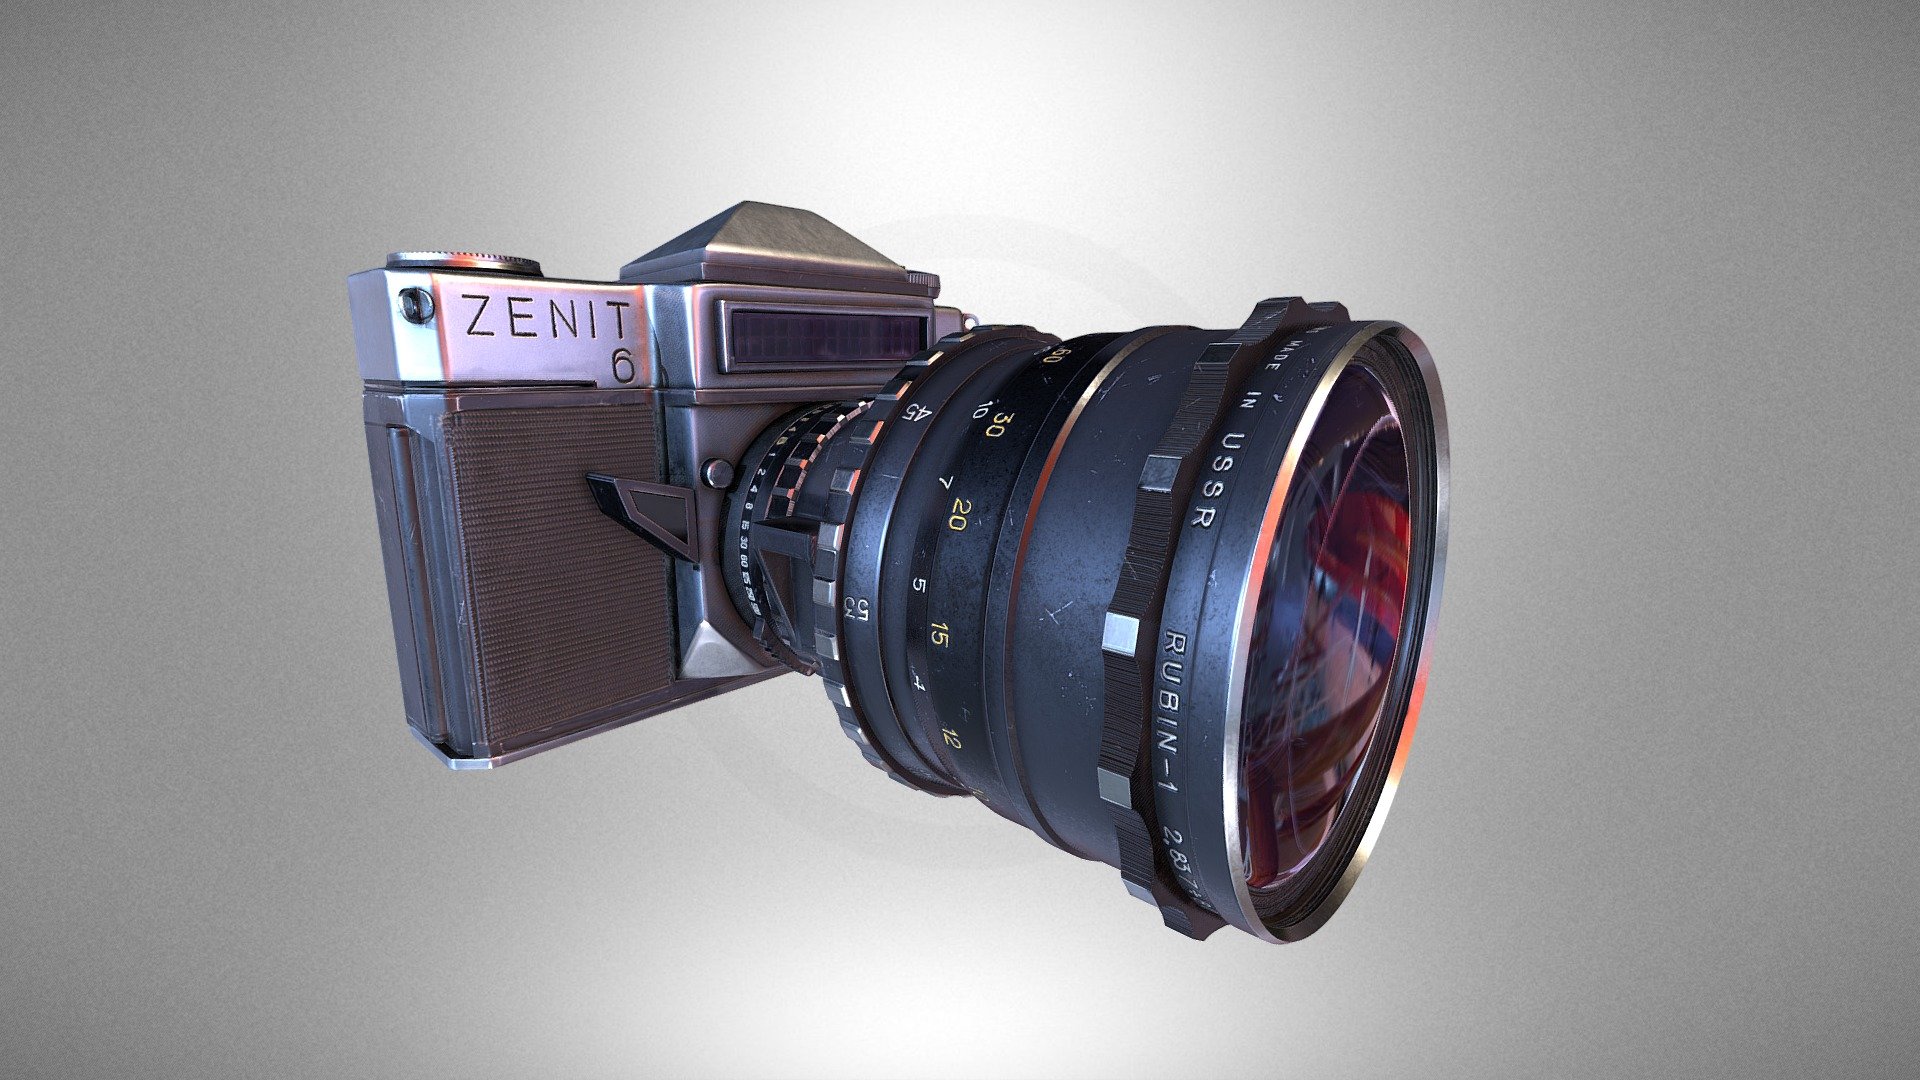 Zenit 6 camera